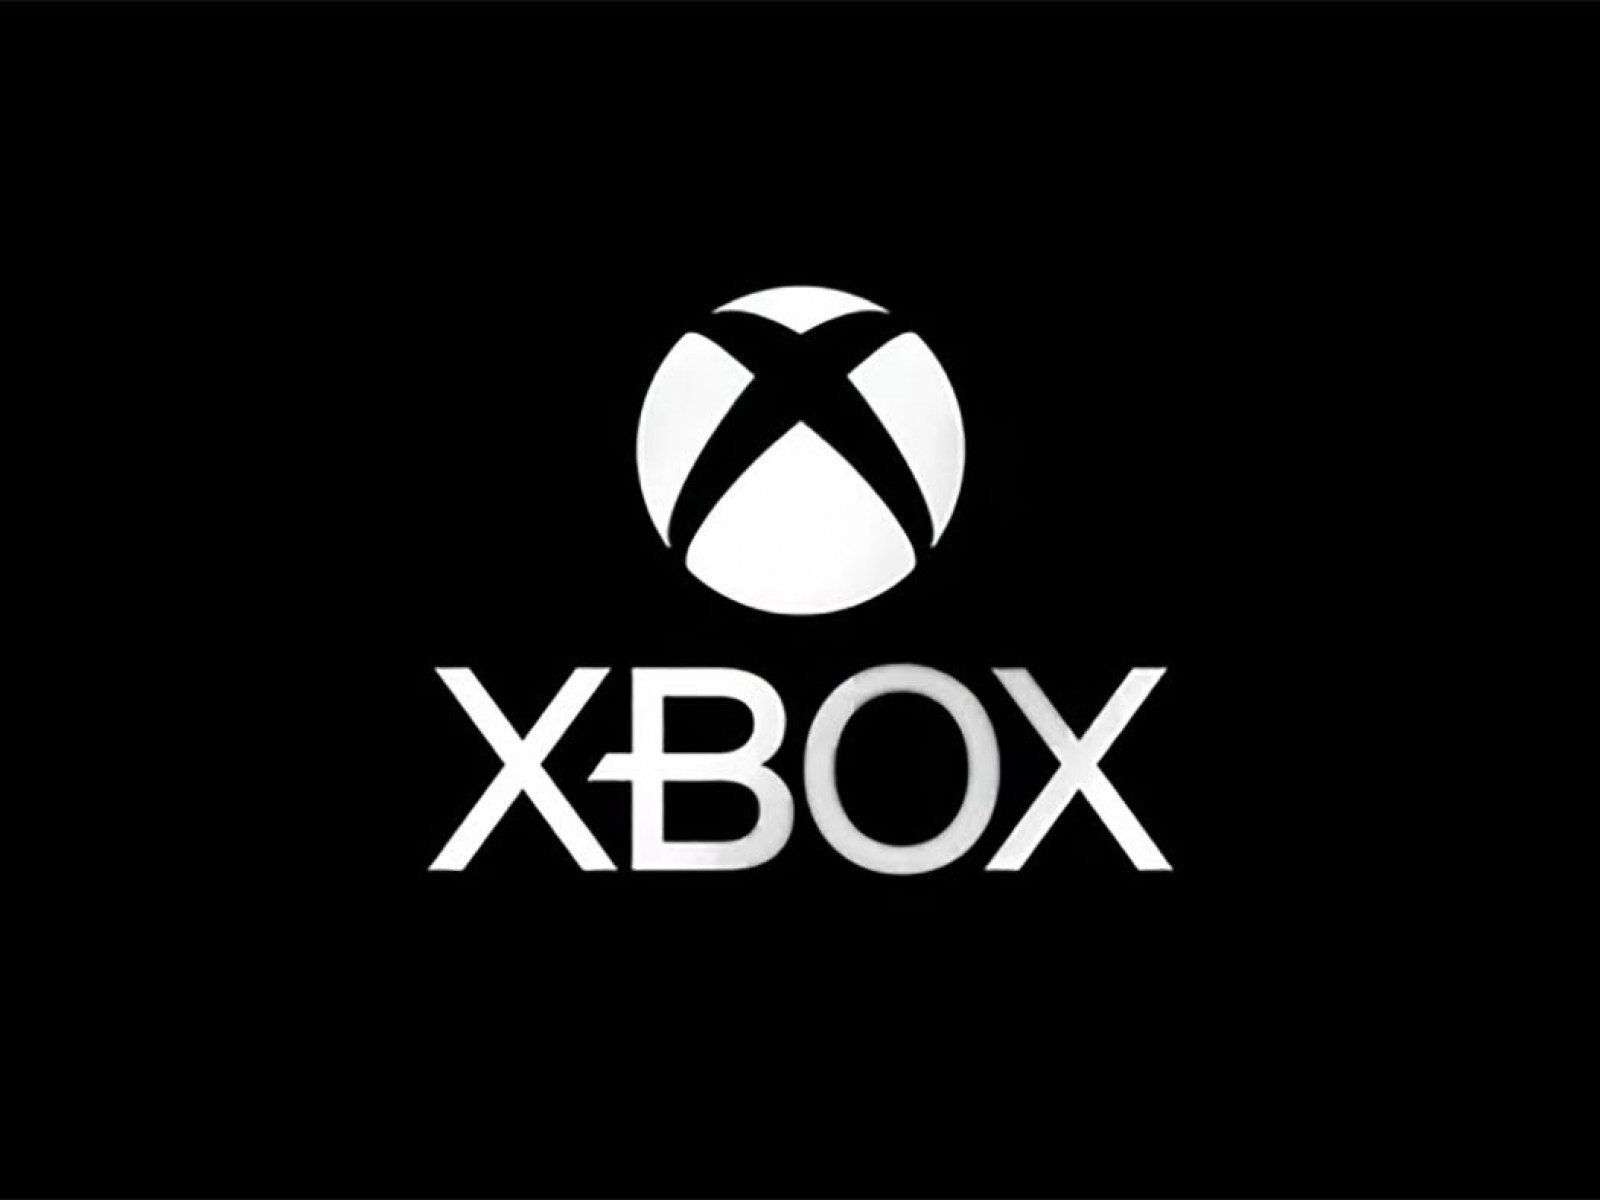 xbox-logo-20-20-black-white.jpg